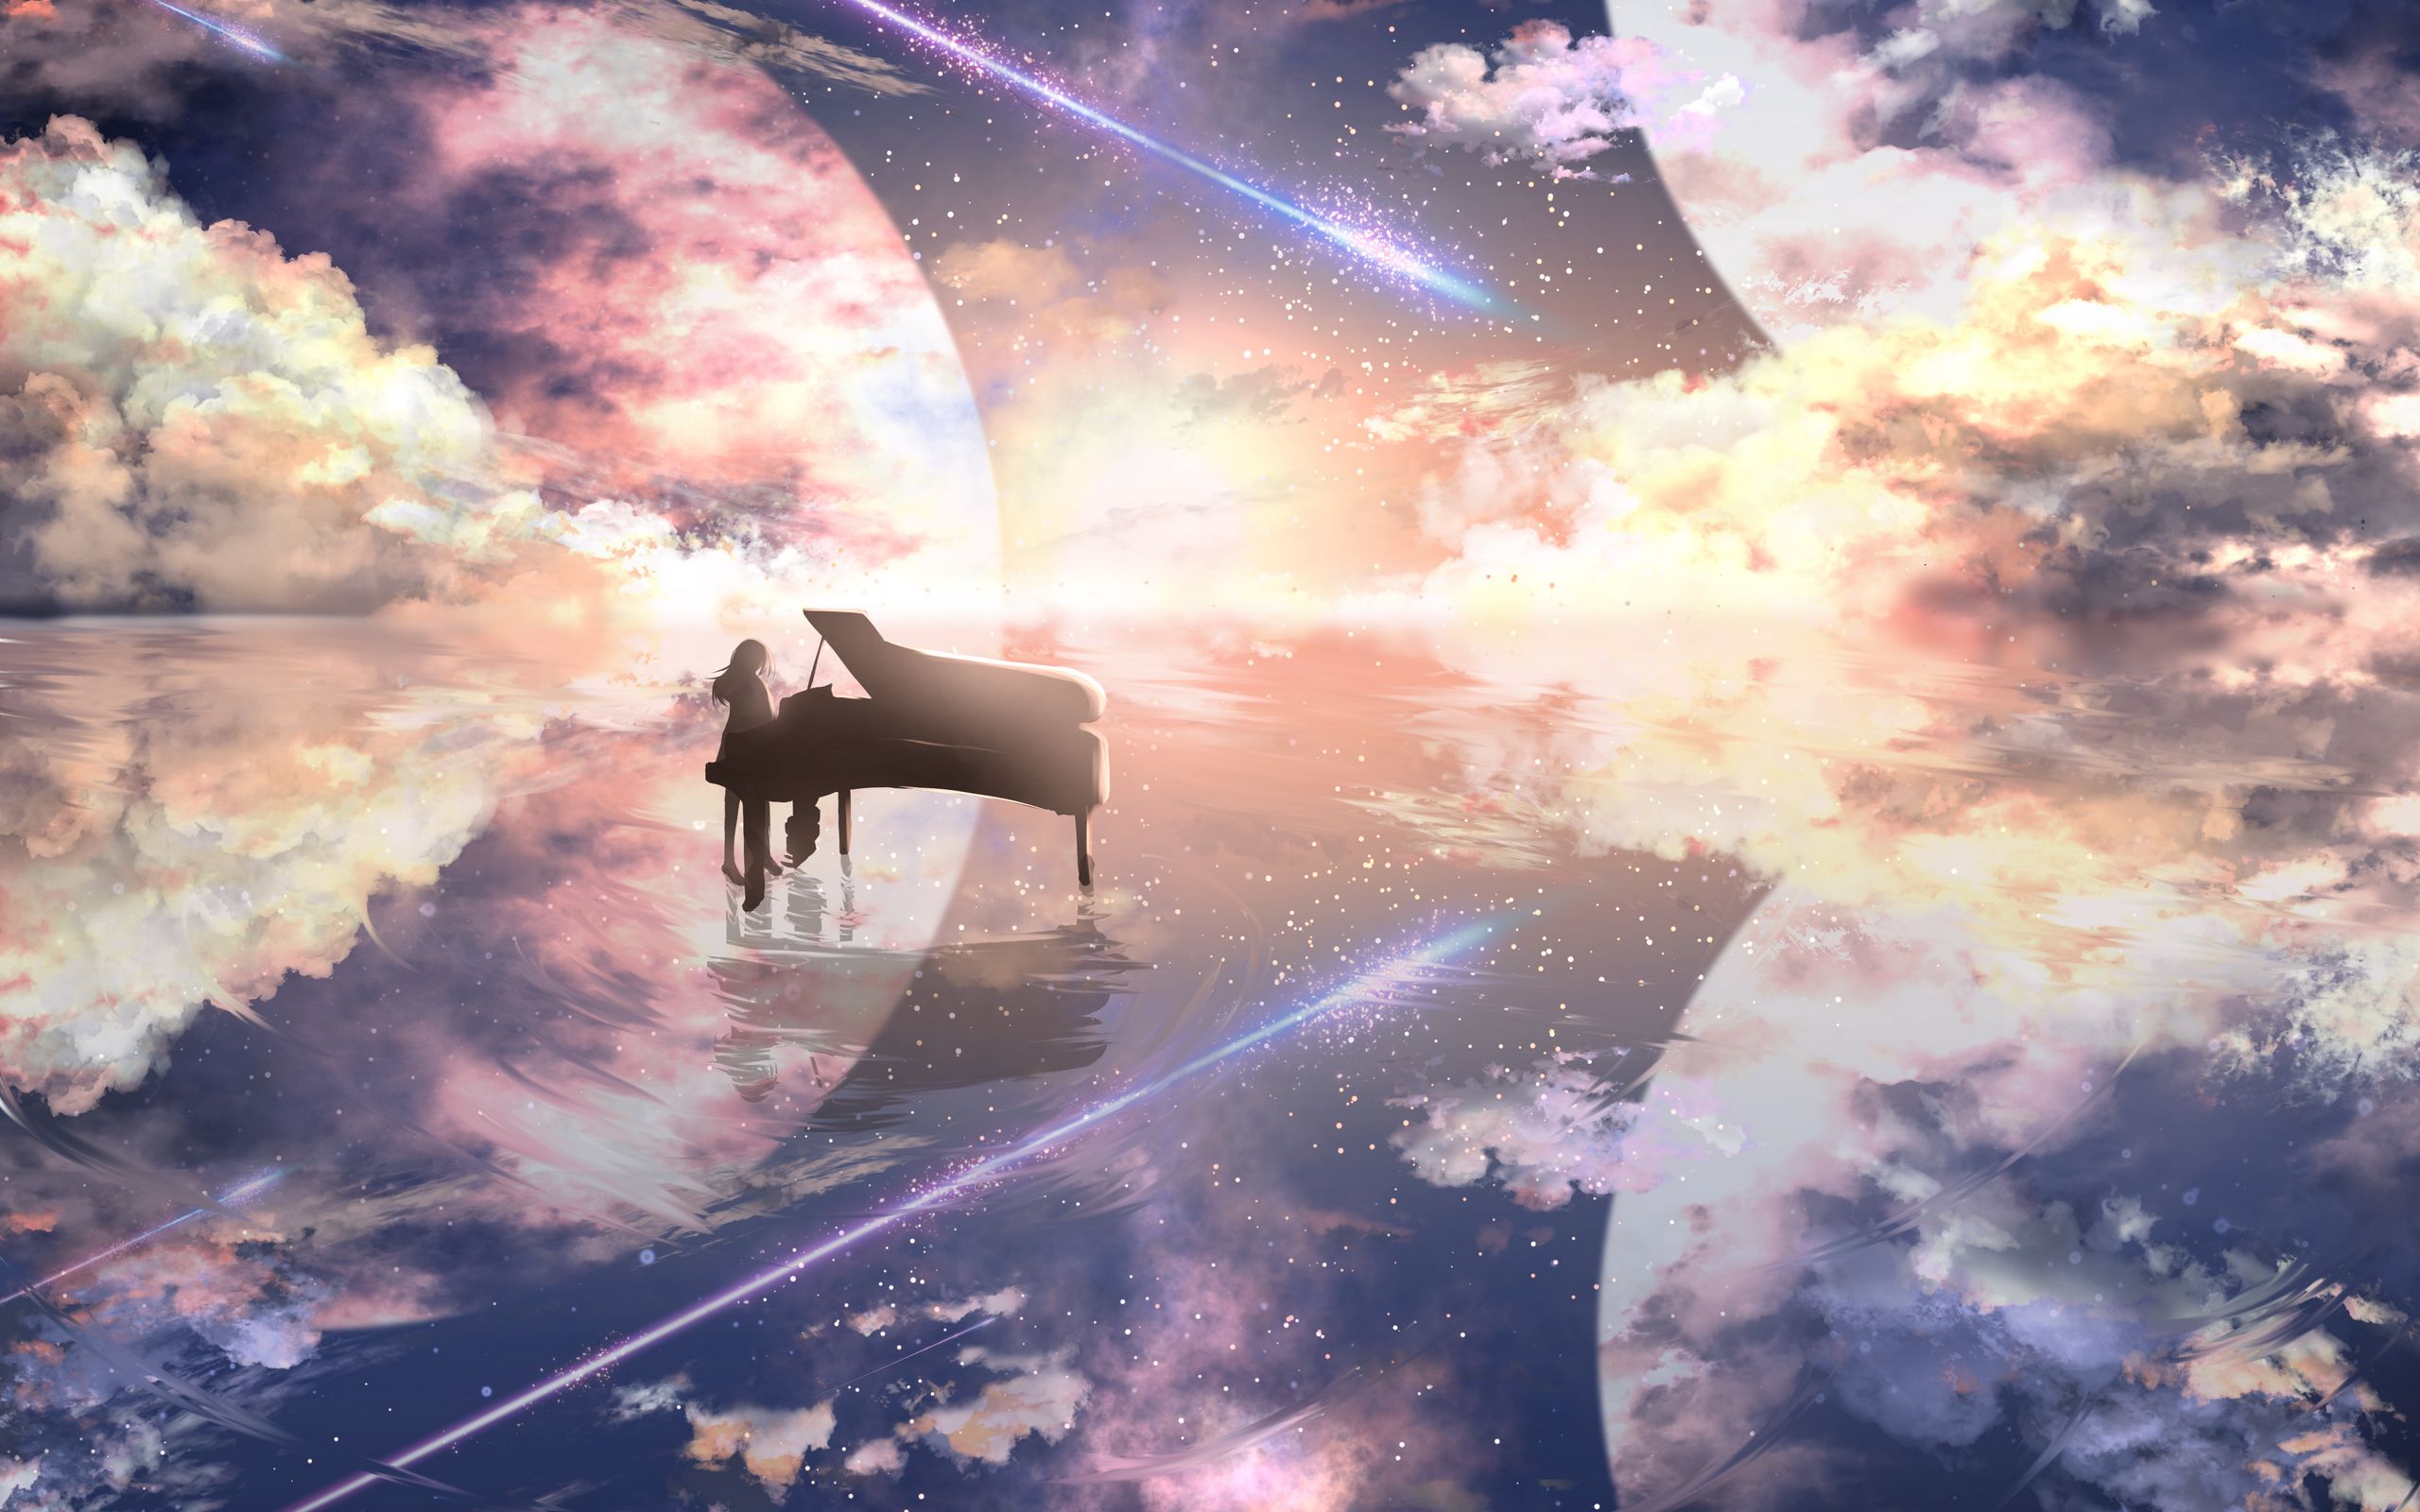 Download wallpaper 2560x1600 piano, silhouette, space, illusion, anime  widescreen 16:10 hd background